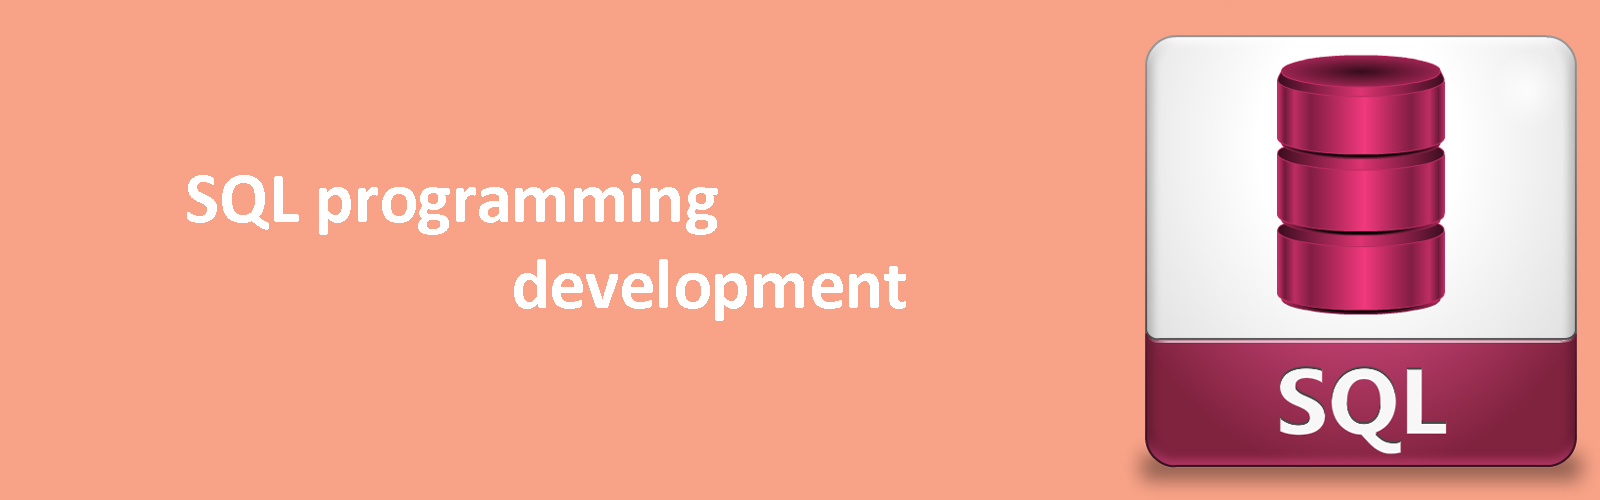 sql-programming-development